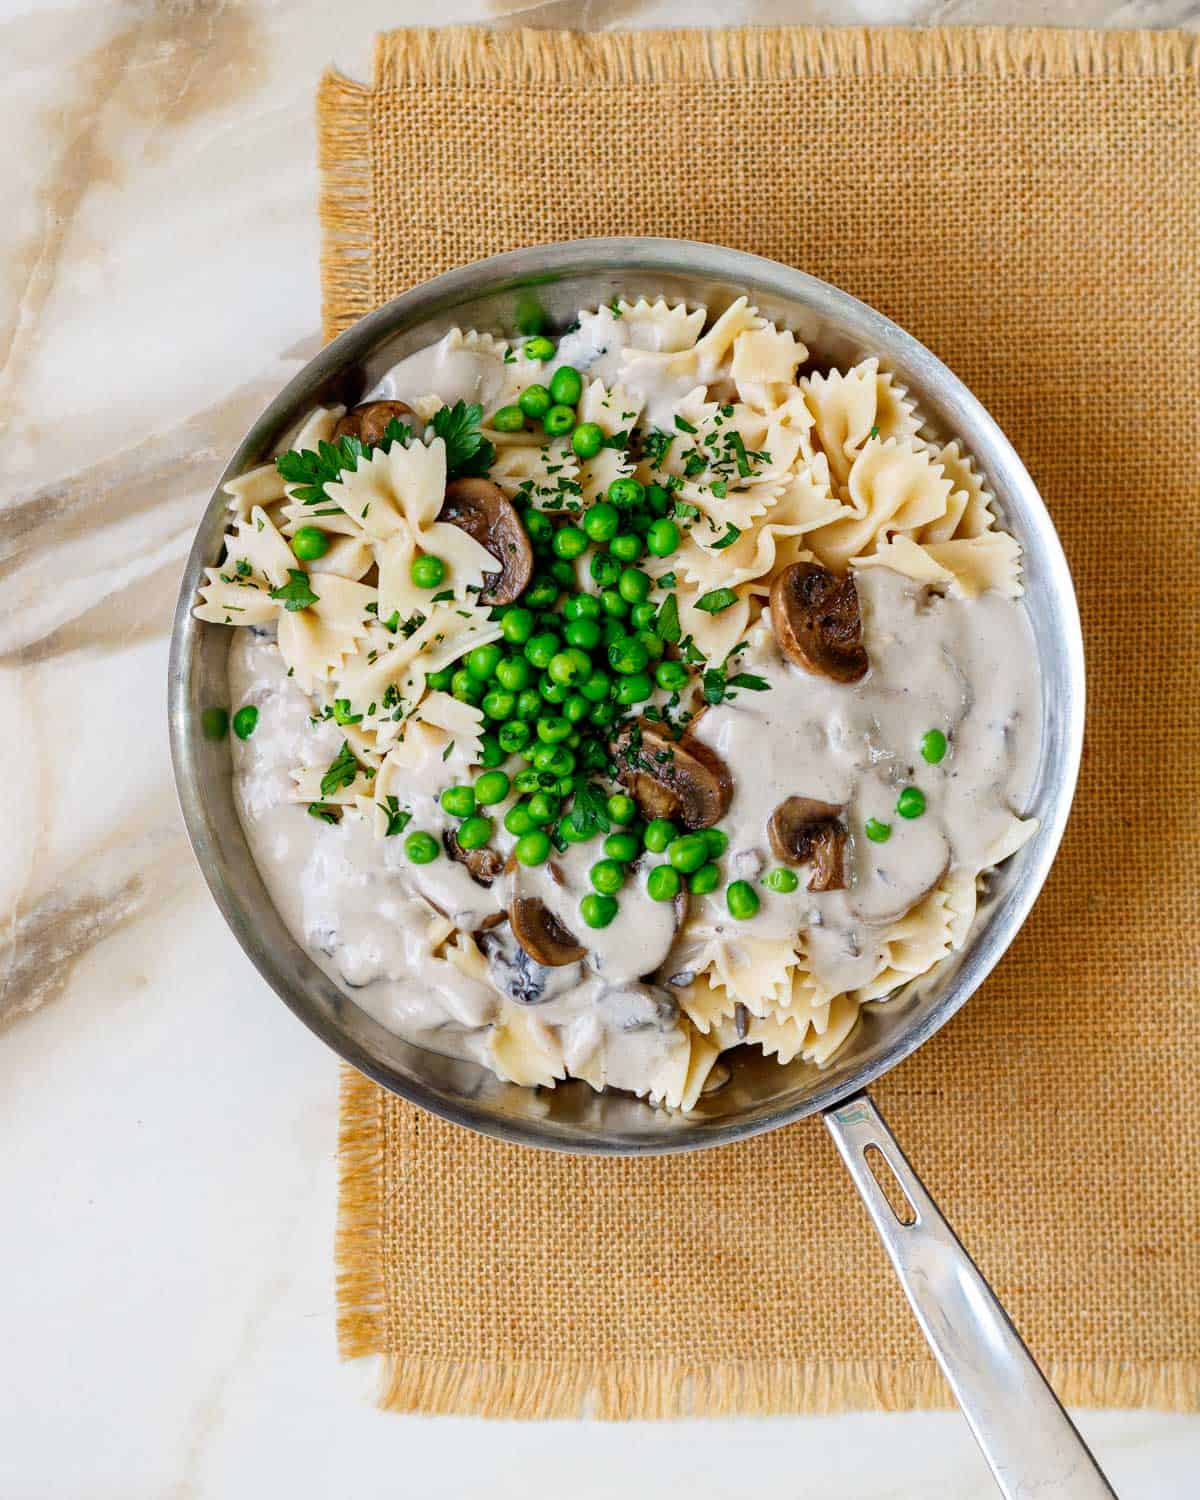 Pan of farfalle pasta with peas in a creamy mushroom sauce.